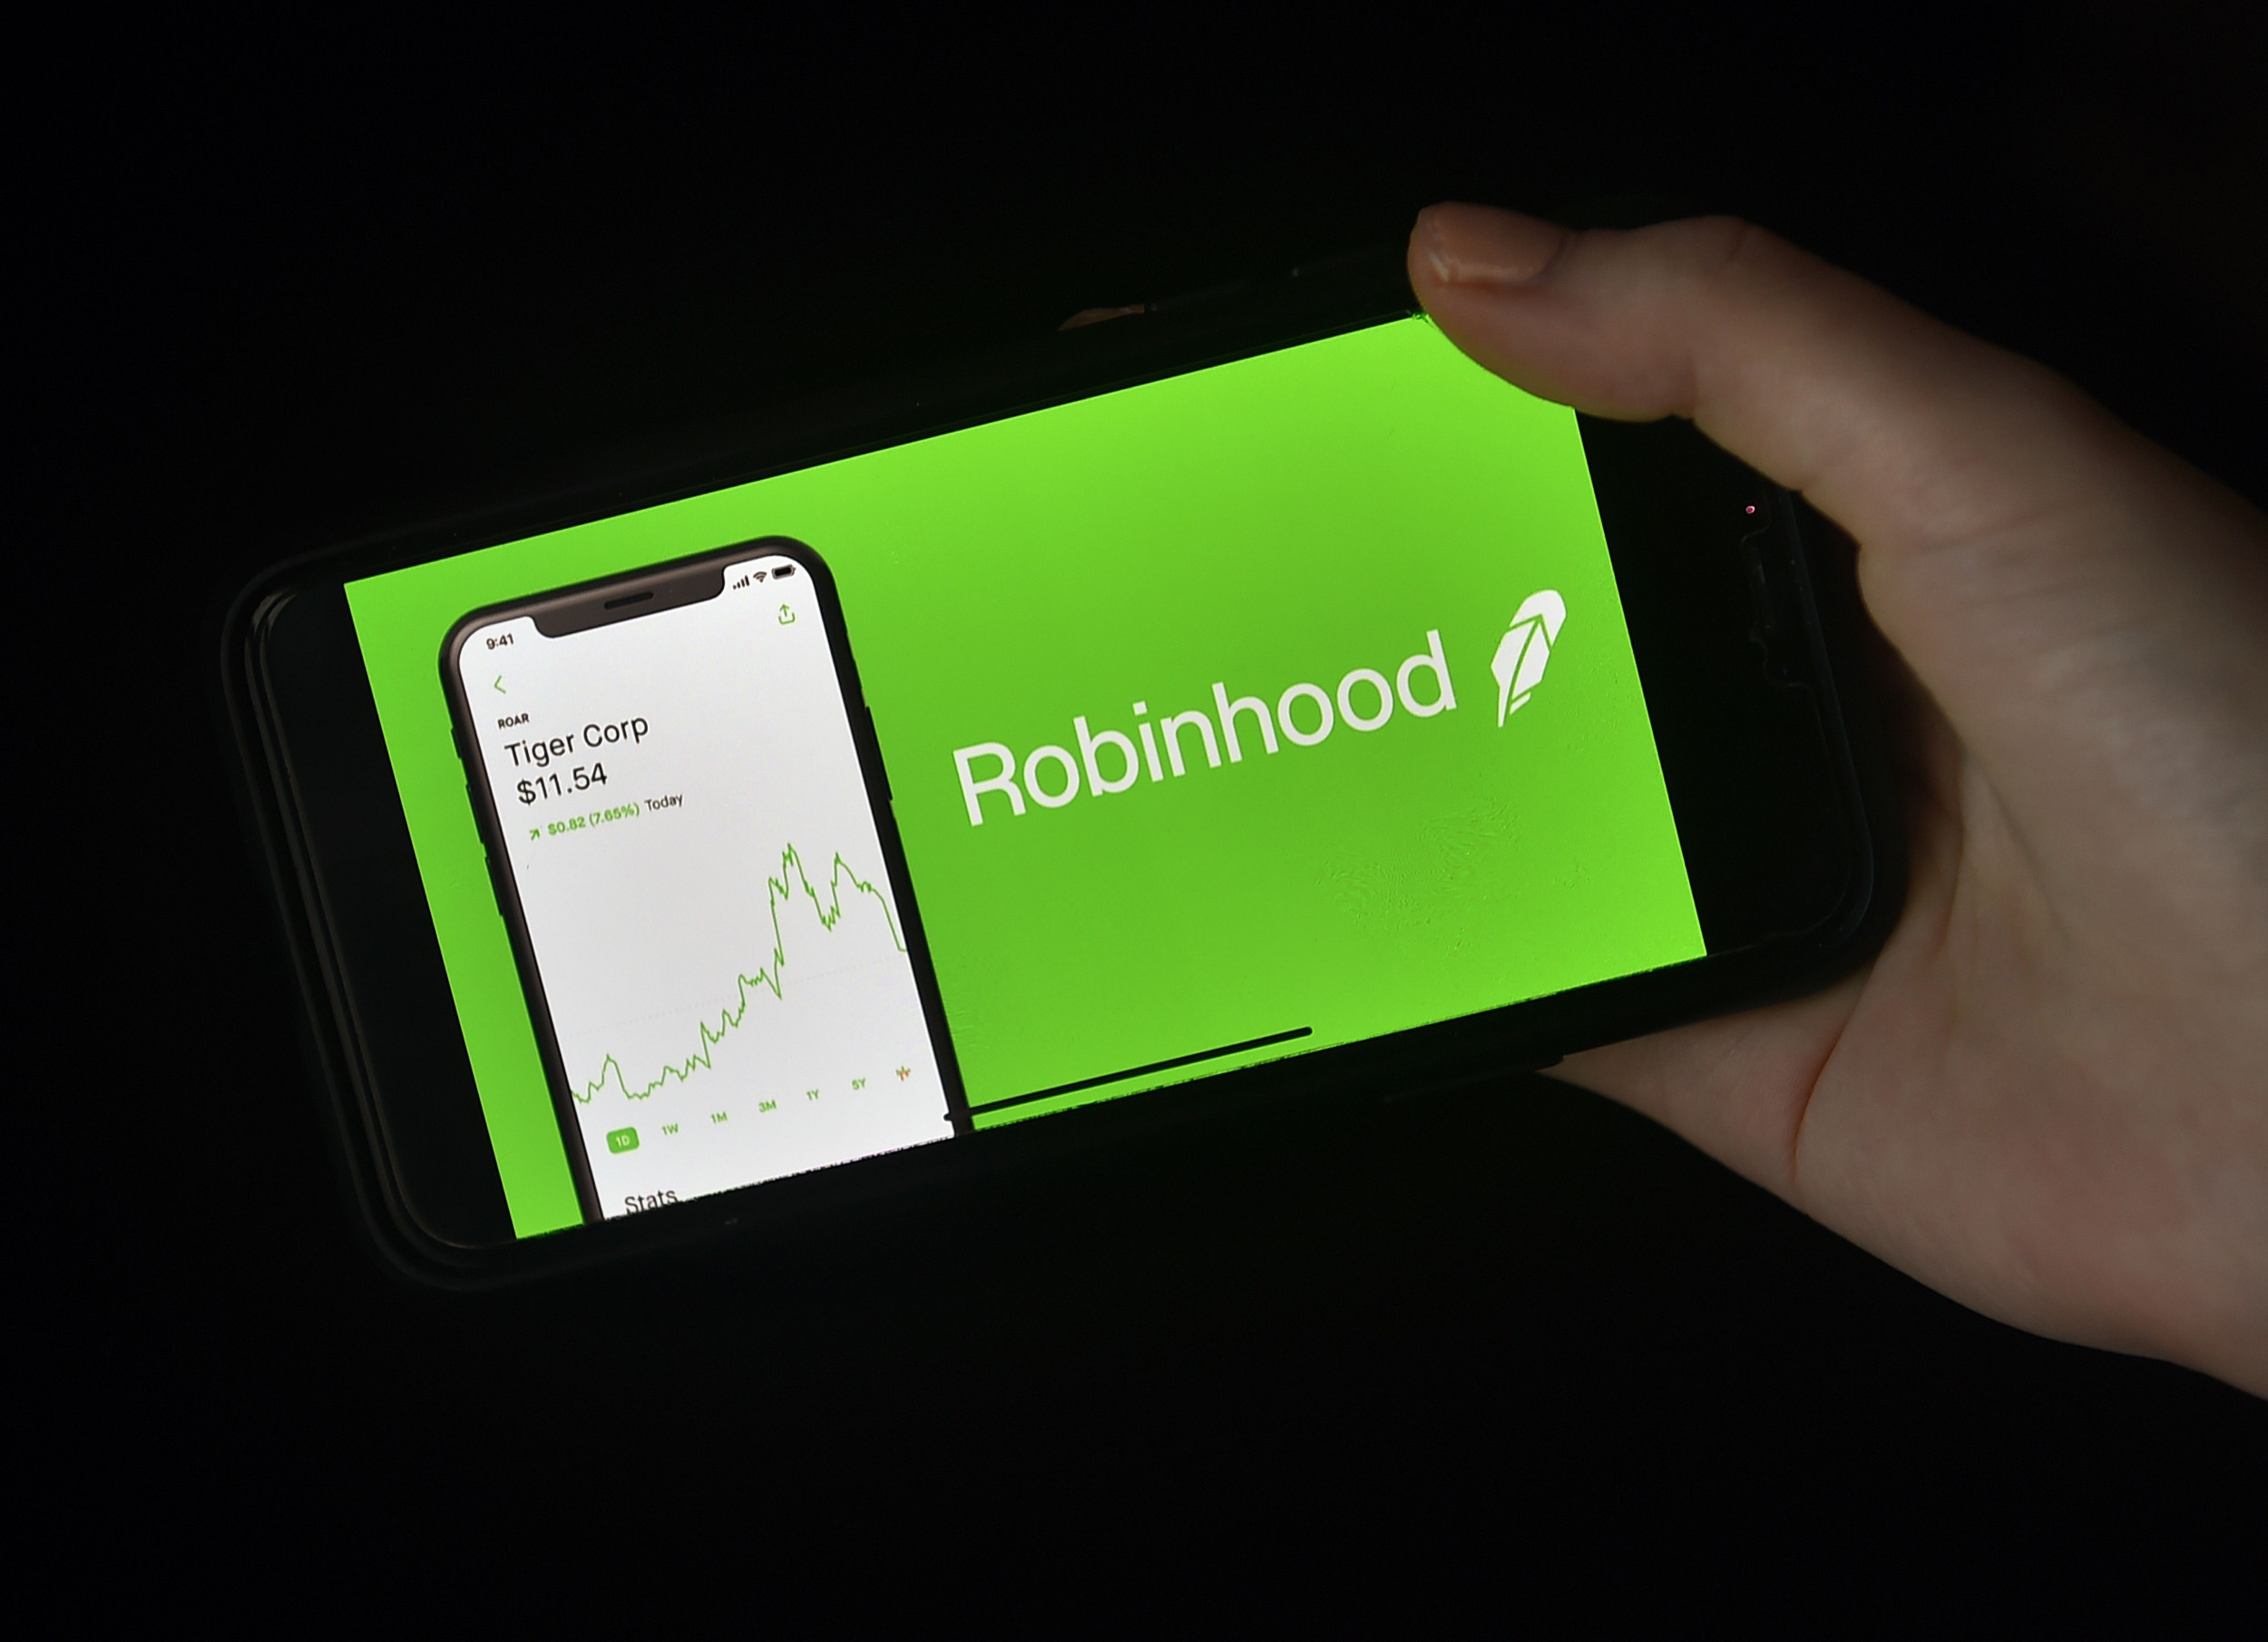 Robin Hood Society Mistaken for Robinhood App, Sees Surge ...